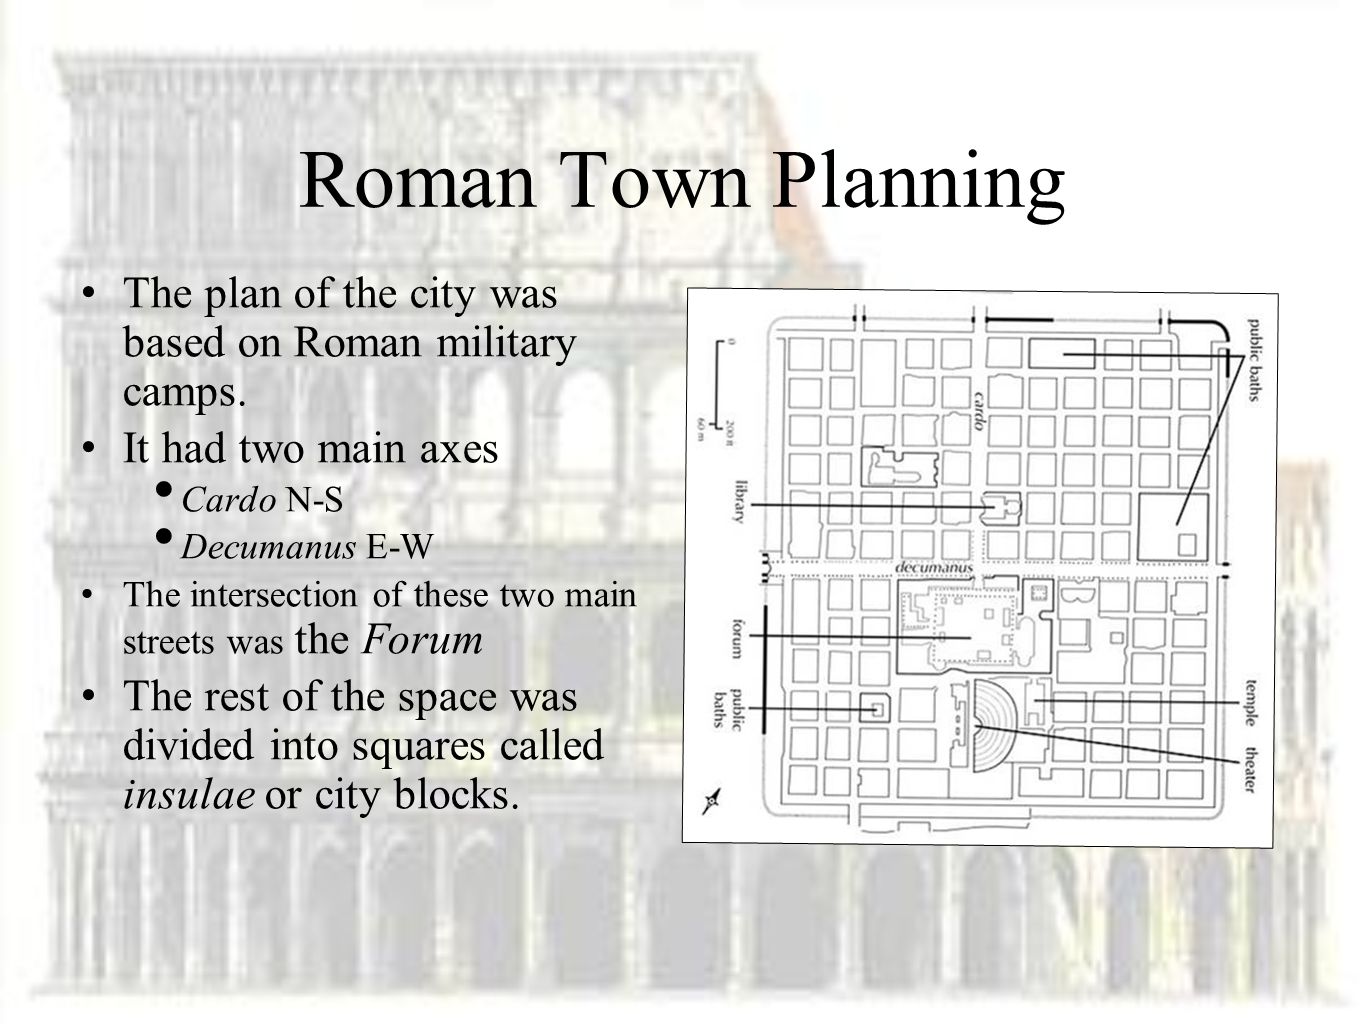 Ancient Roman city planning